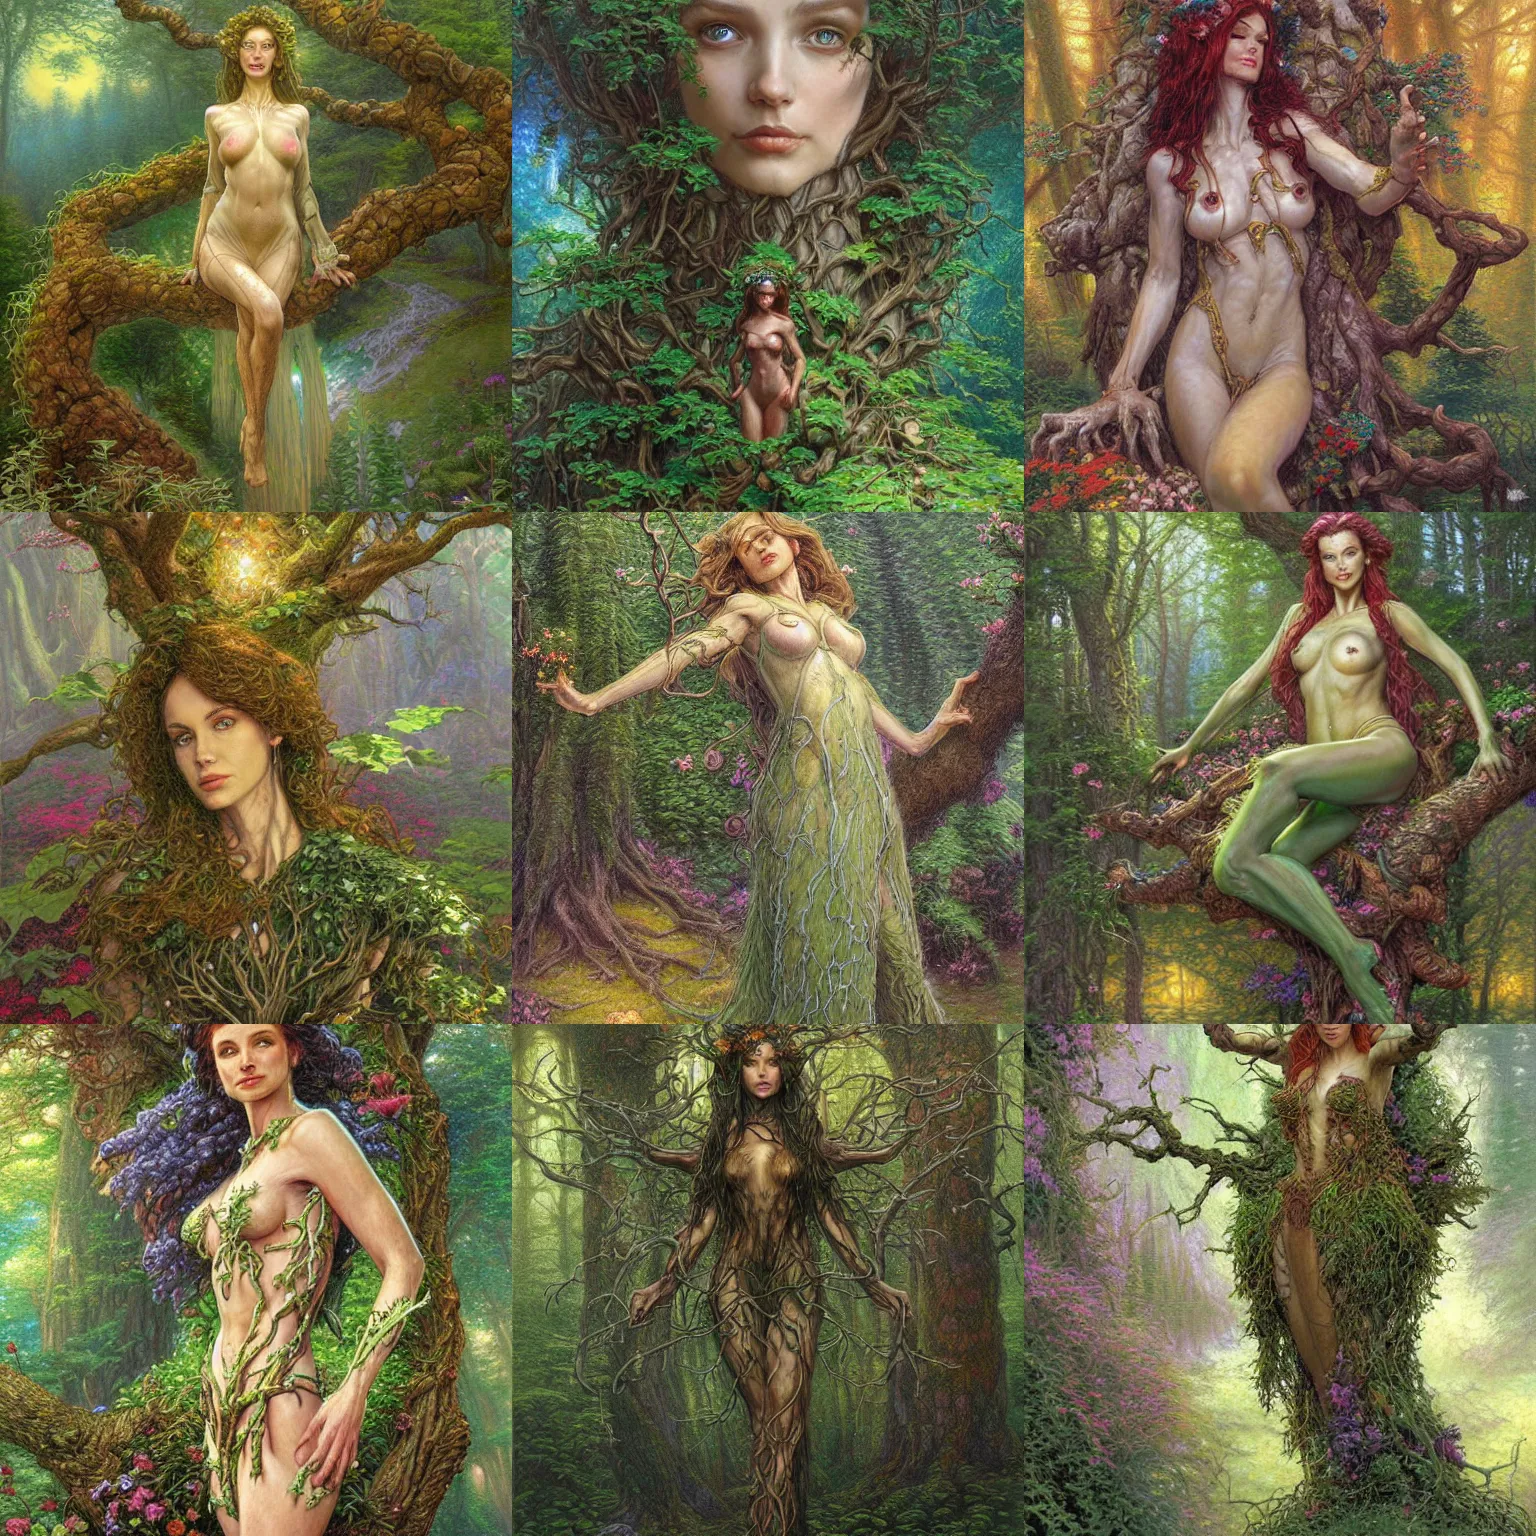 Prompt: human tree hybrid dryad, fantasy, nature art in style of thomas kinkade, fantasy character art by Donato Giancola,